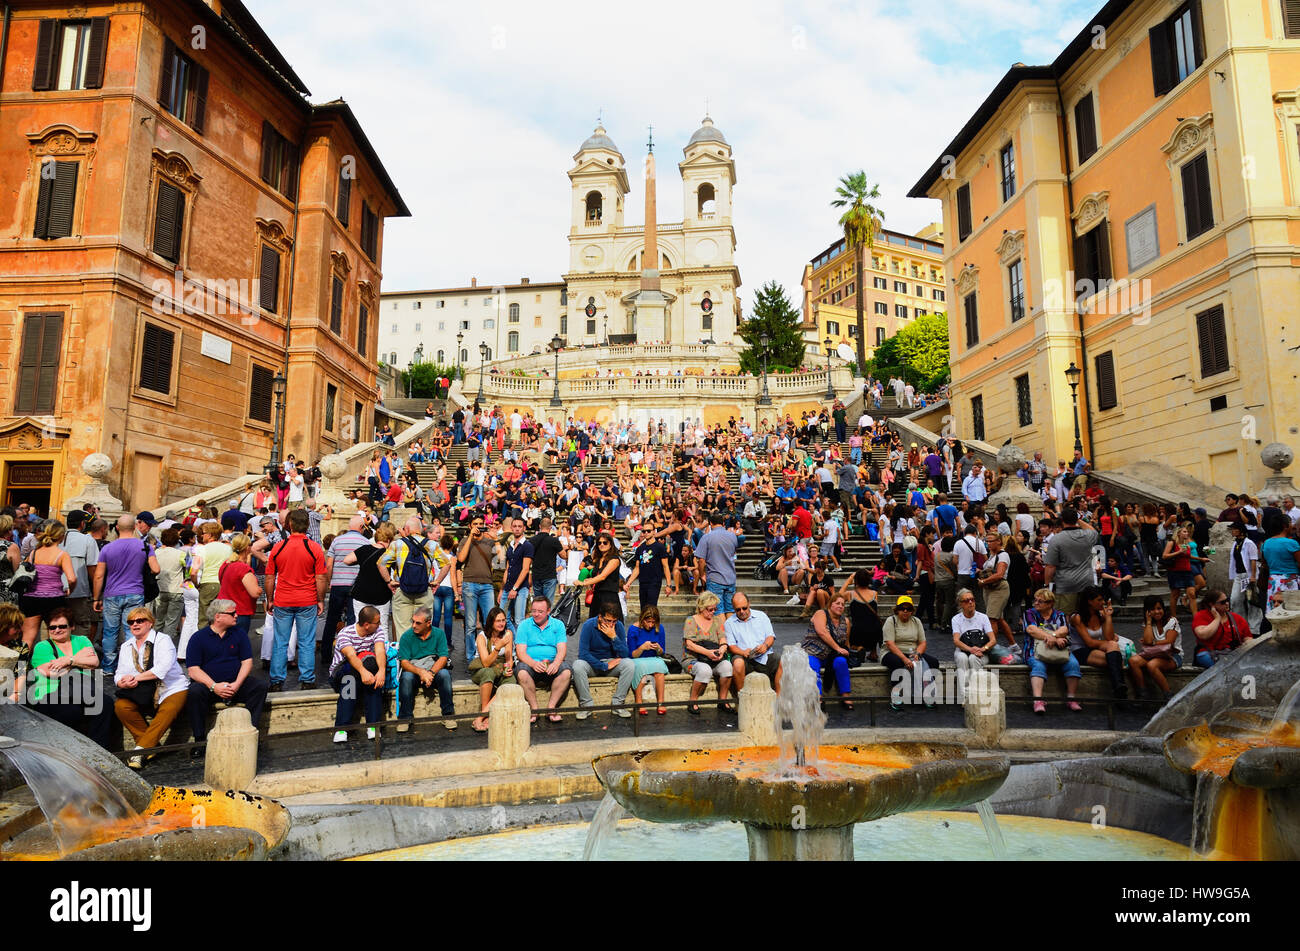 Spanish Steps and Square of Spain - Piazza di Spagna. Rome, Lazio, Italy, Europe. Stock Photo